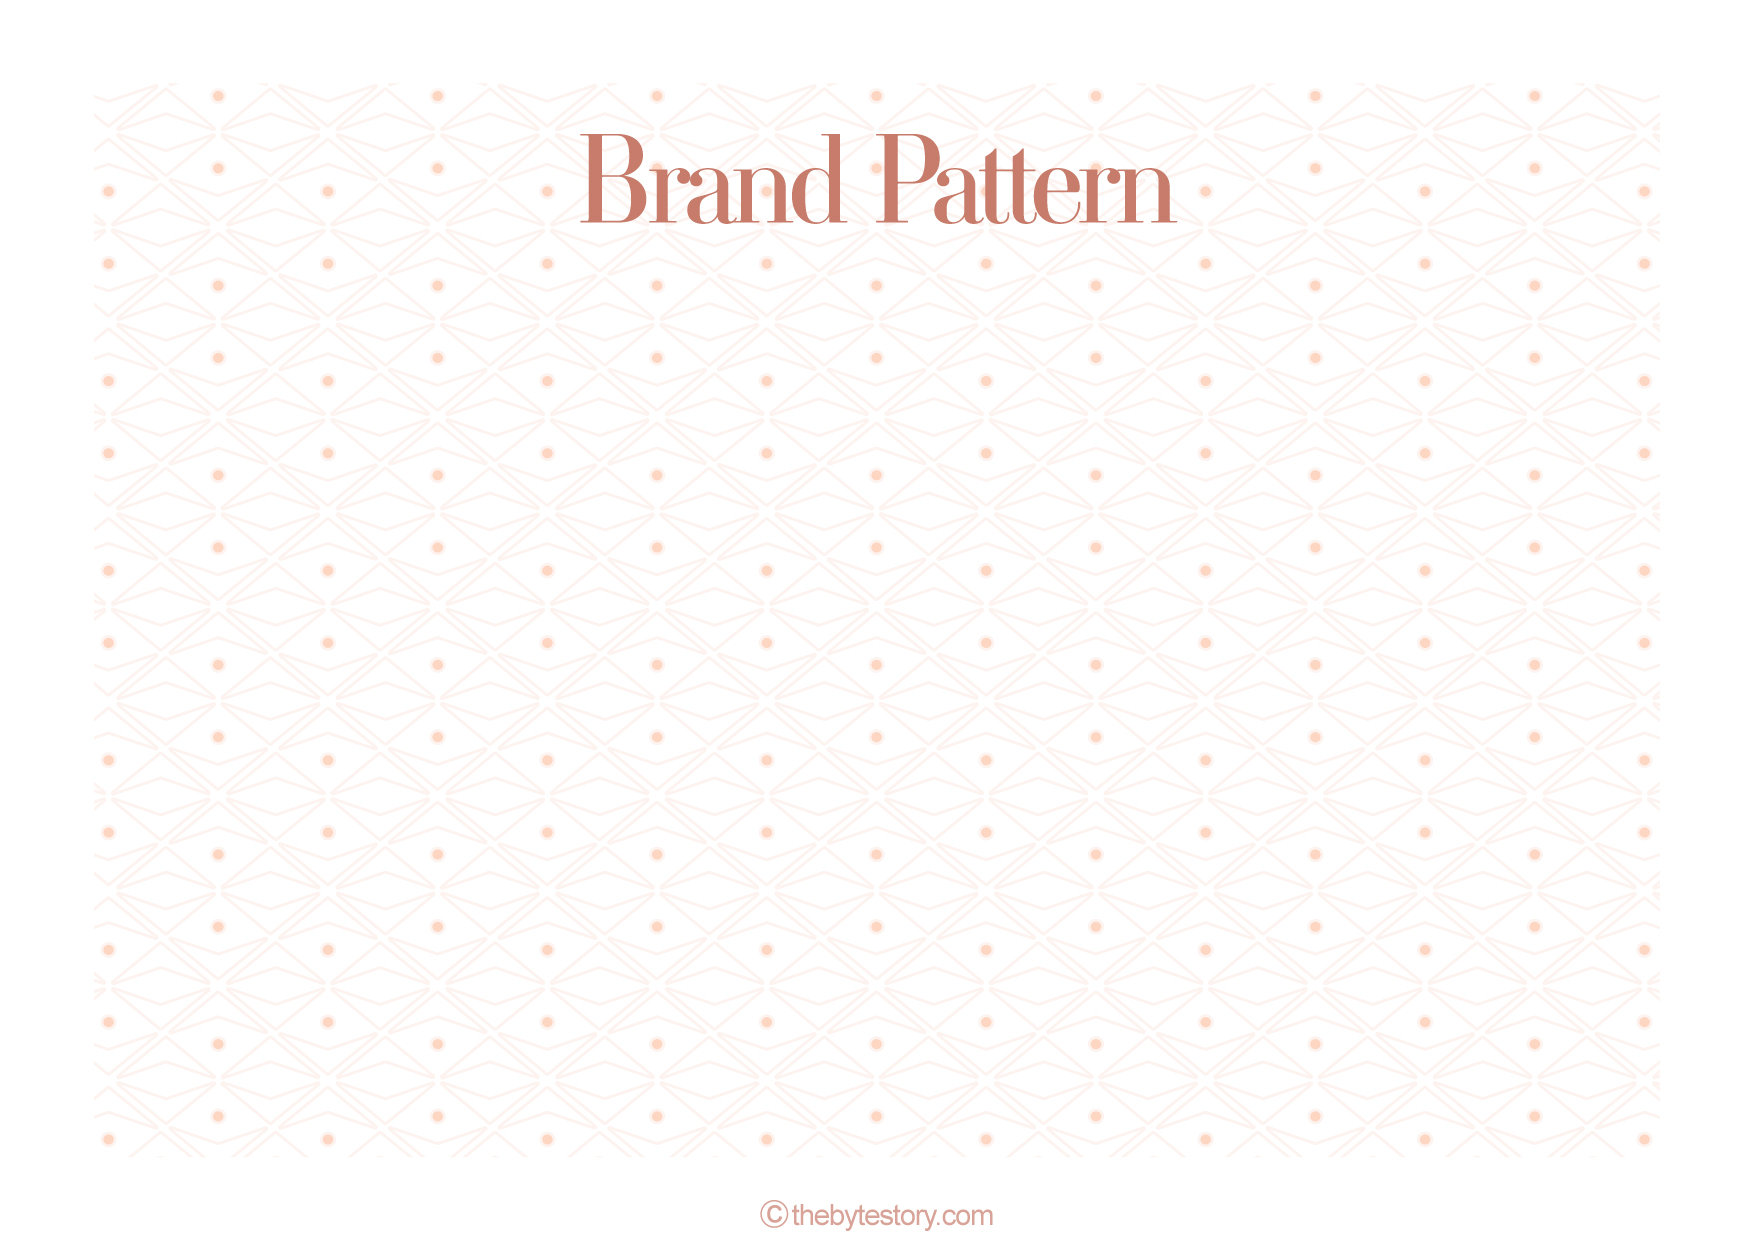 Brand pattern